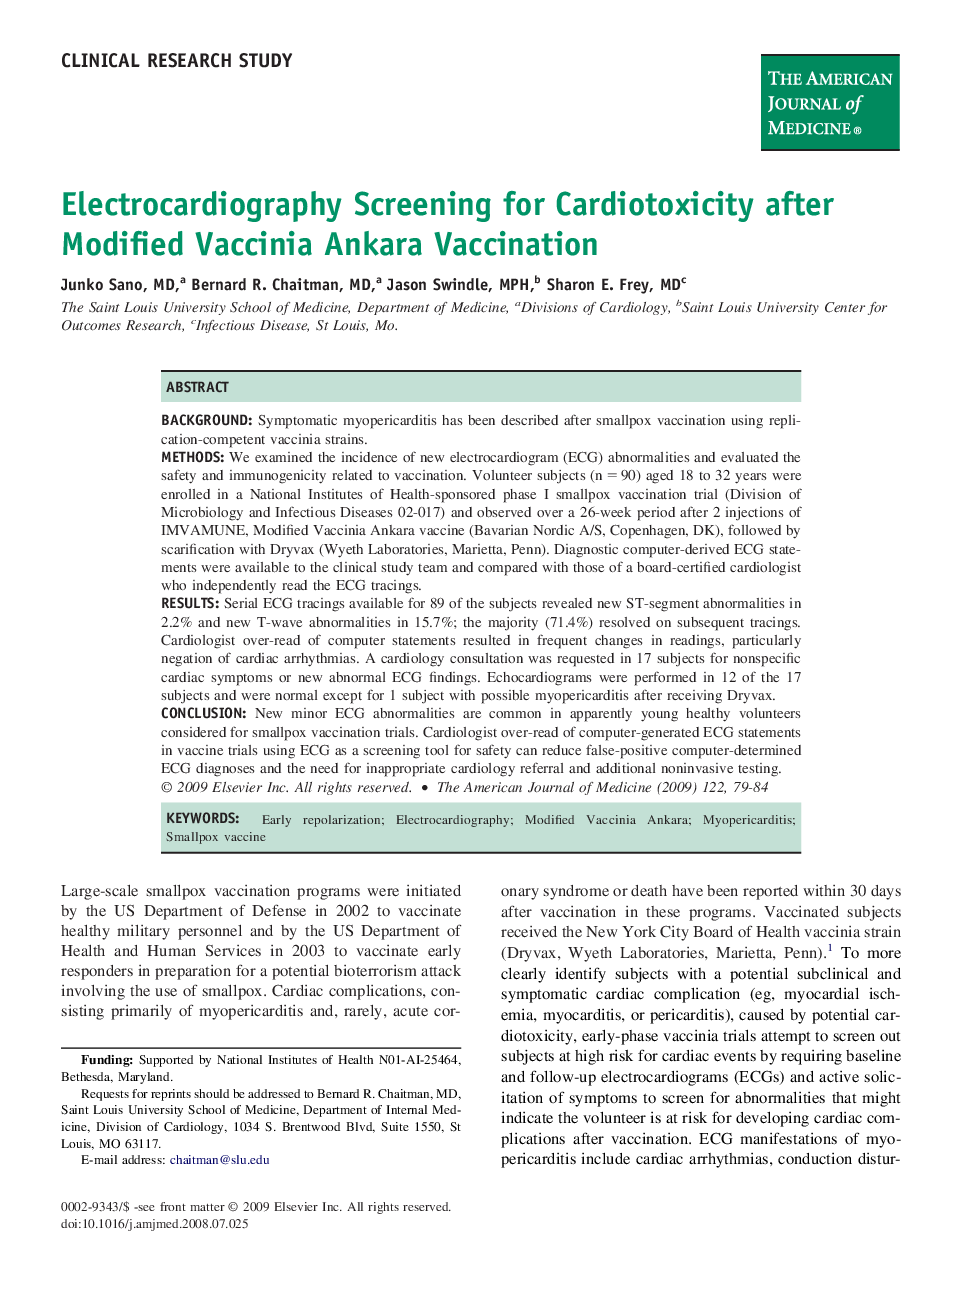 Electrocardiography Screening for Cardiotoxicity after Modified Vaccinia Ankara Vaccination 